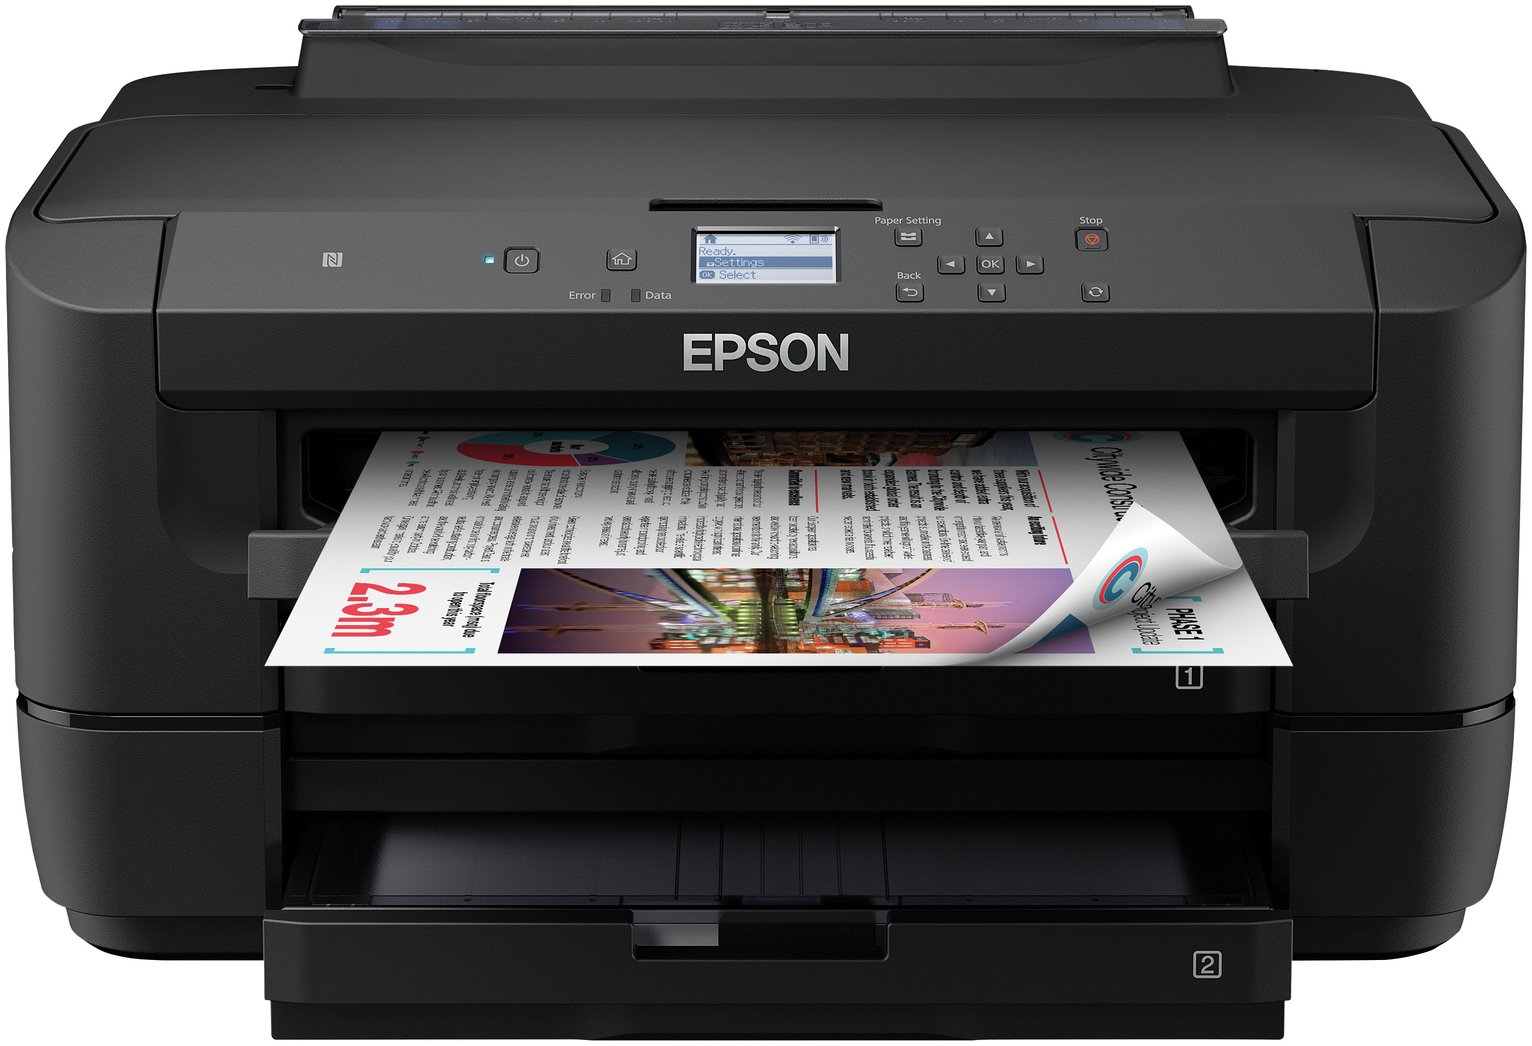 Epson WorkForce WF-7210 Wireless A3 Inkjet Printer Review